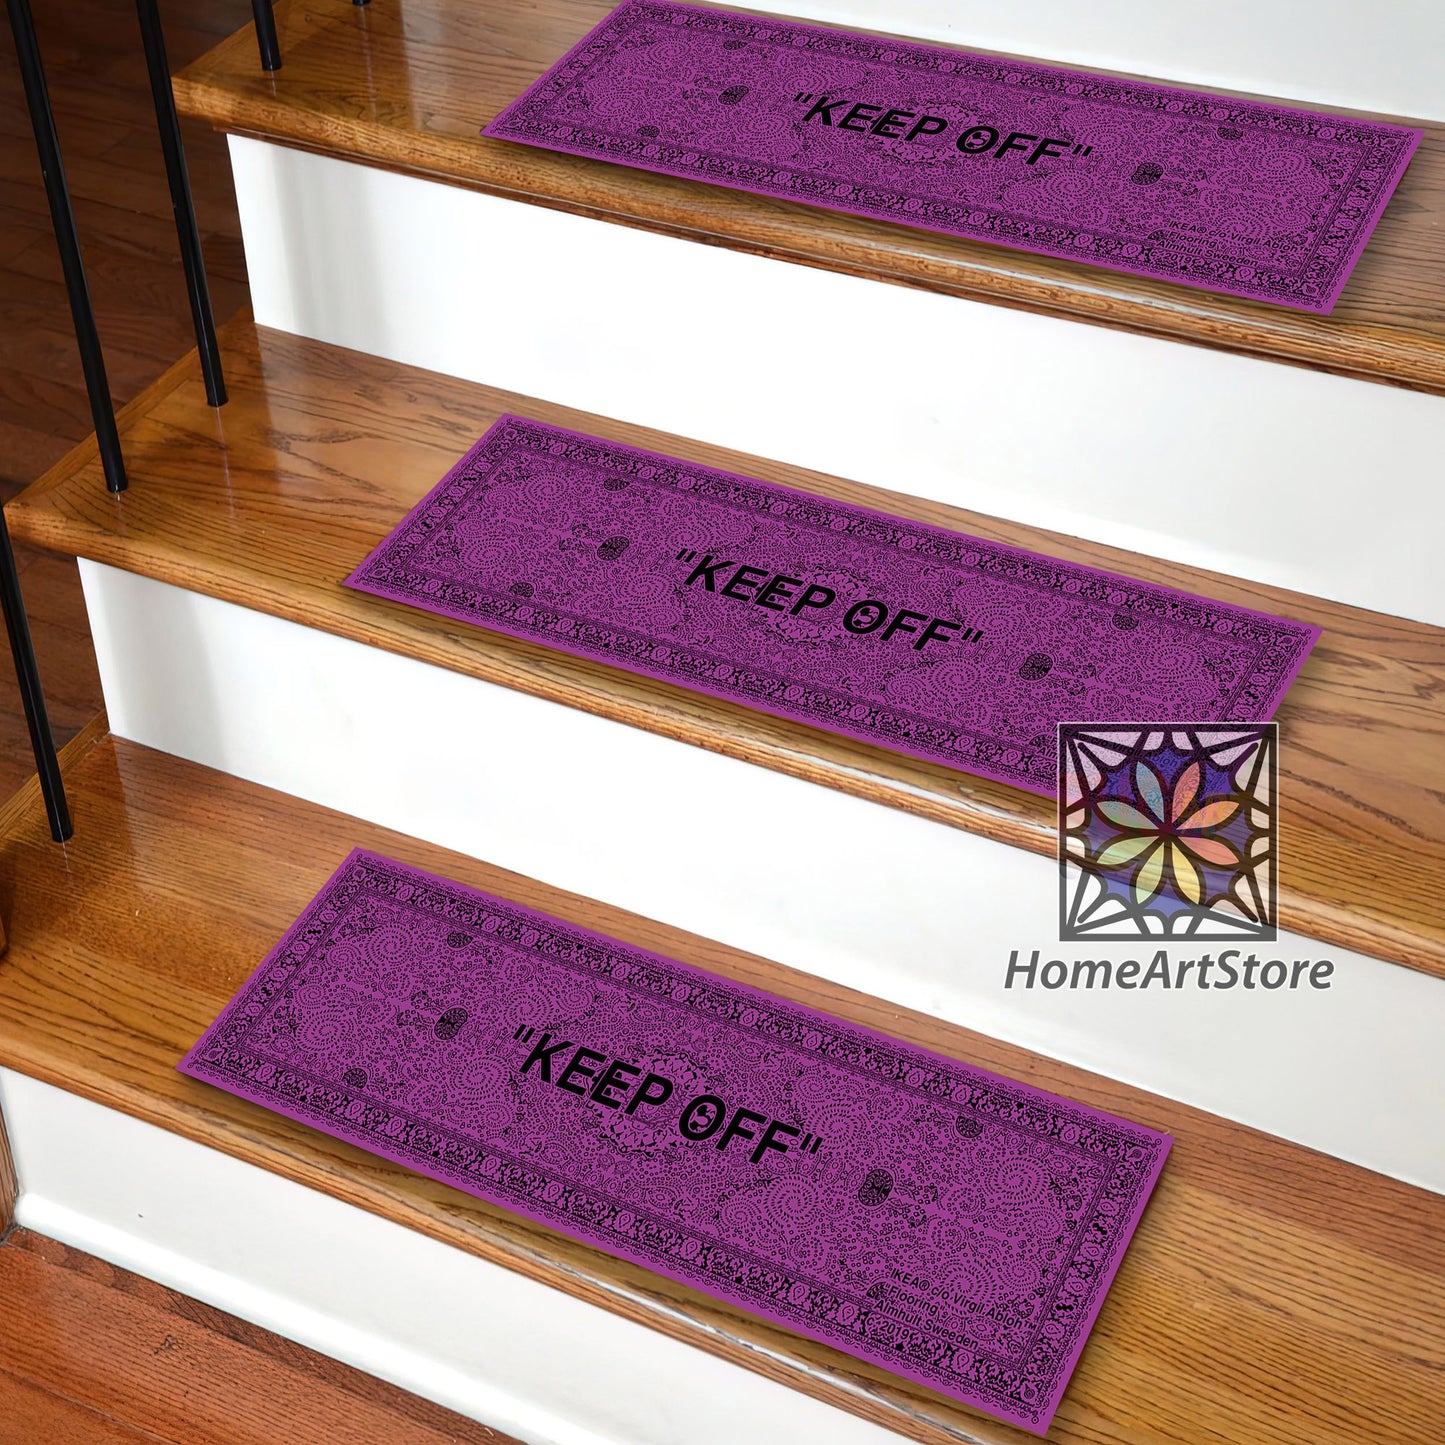 Purple Keep Off Stair Rugs, Keepoff Themed Stair Carpet, Hypebeast Decor, Sneaker Stair Step Mats Street Fashion